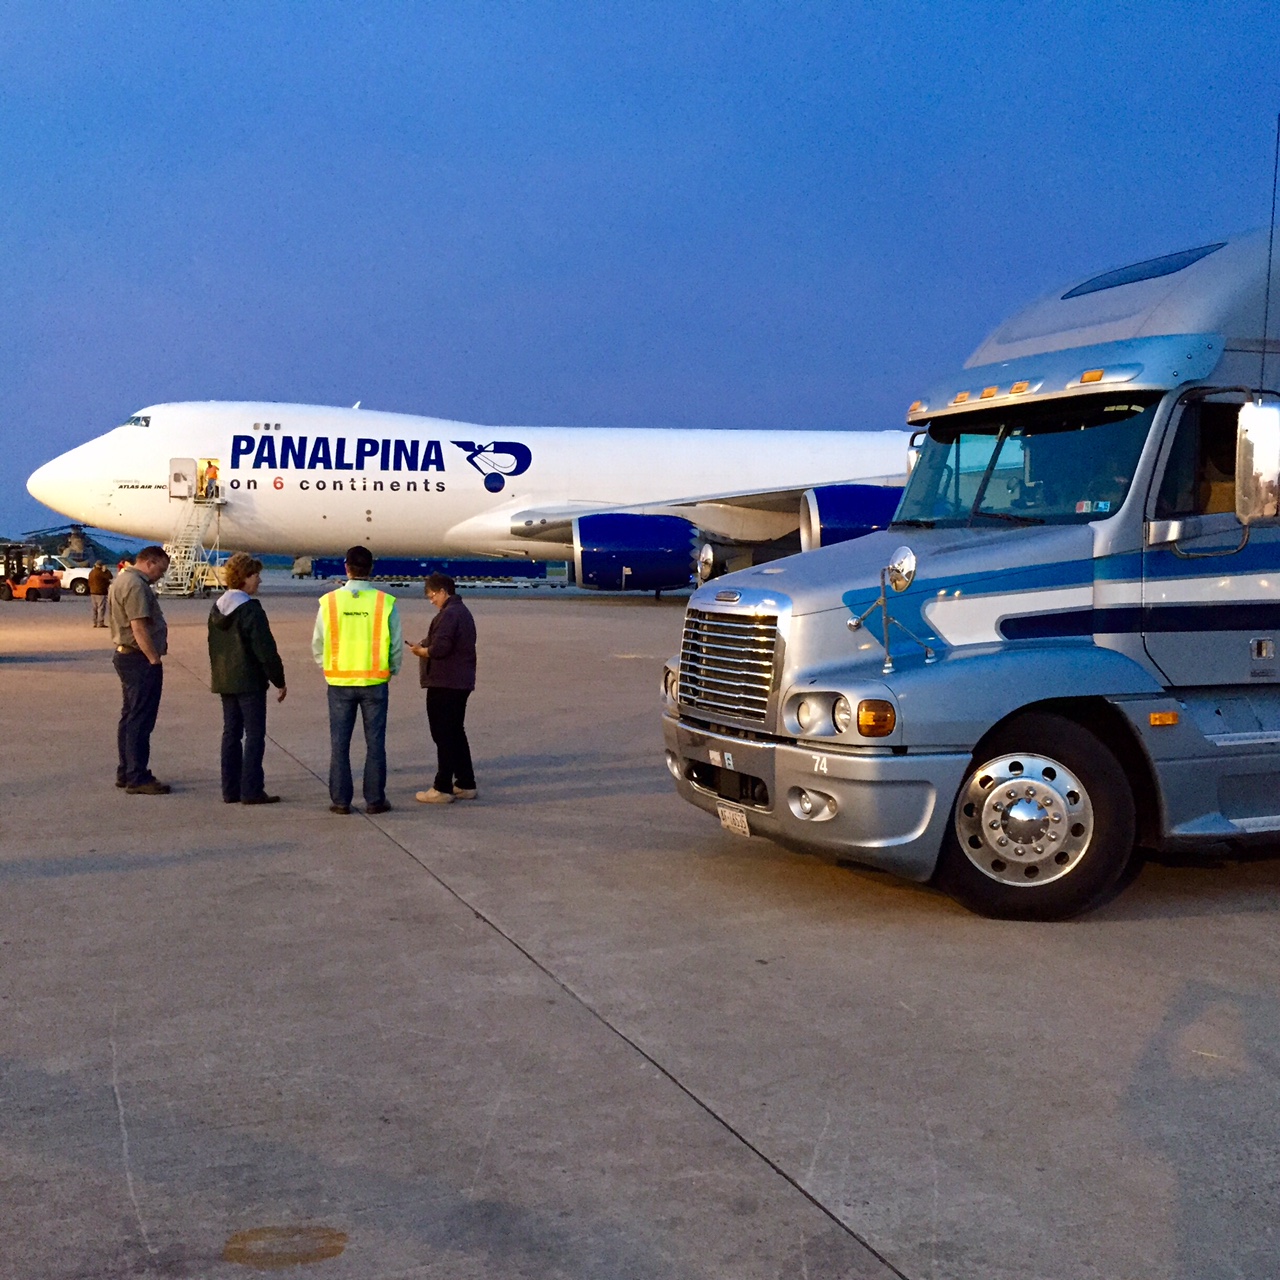 Brook Ledge truck with Panalpina airplane